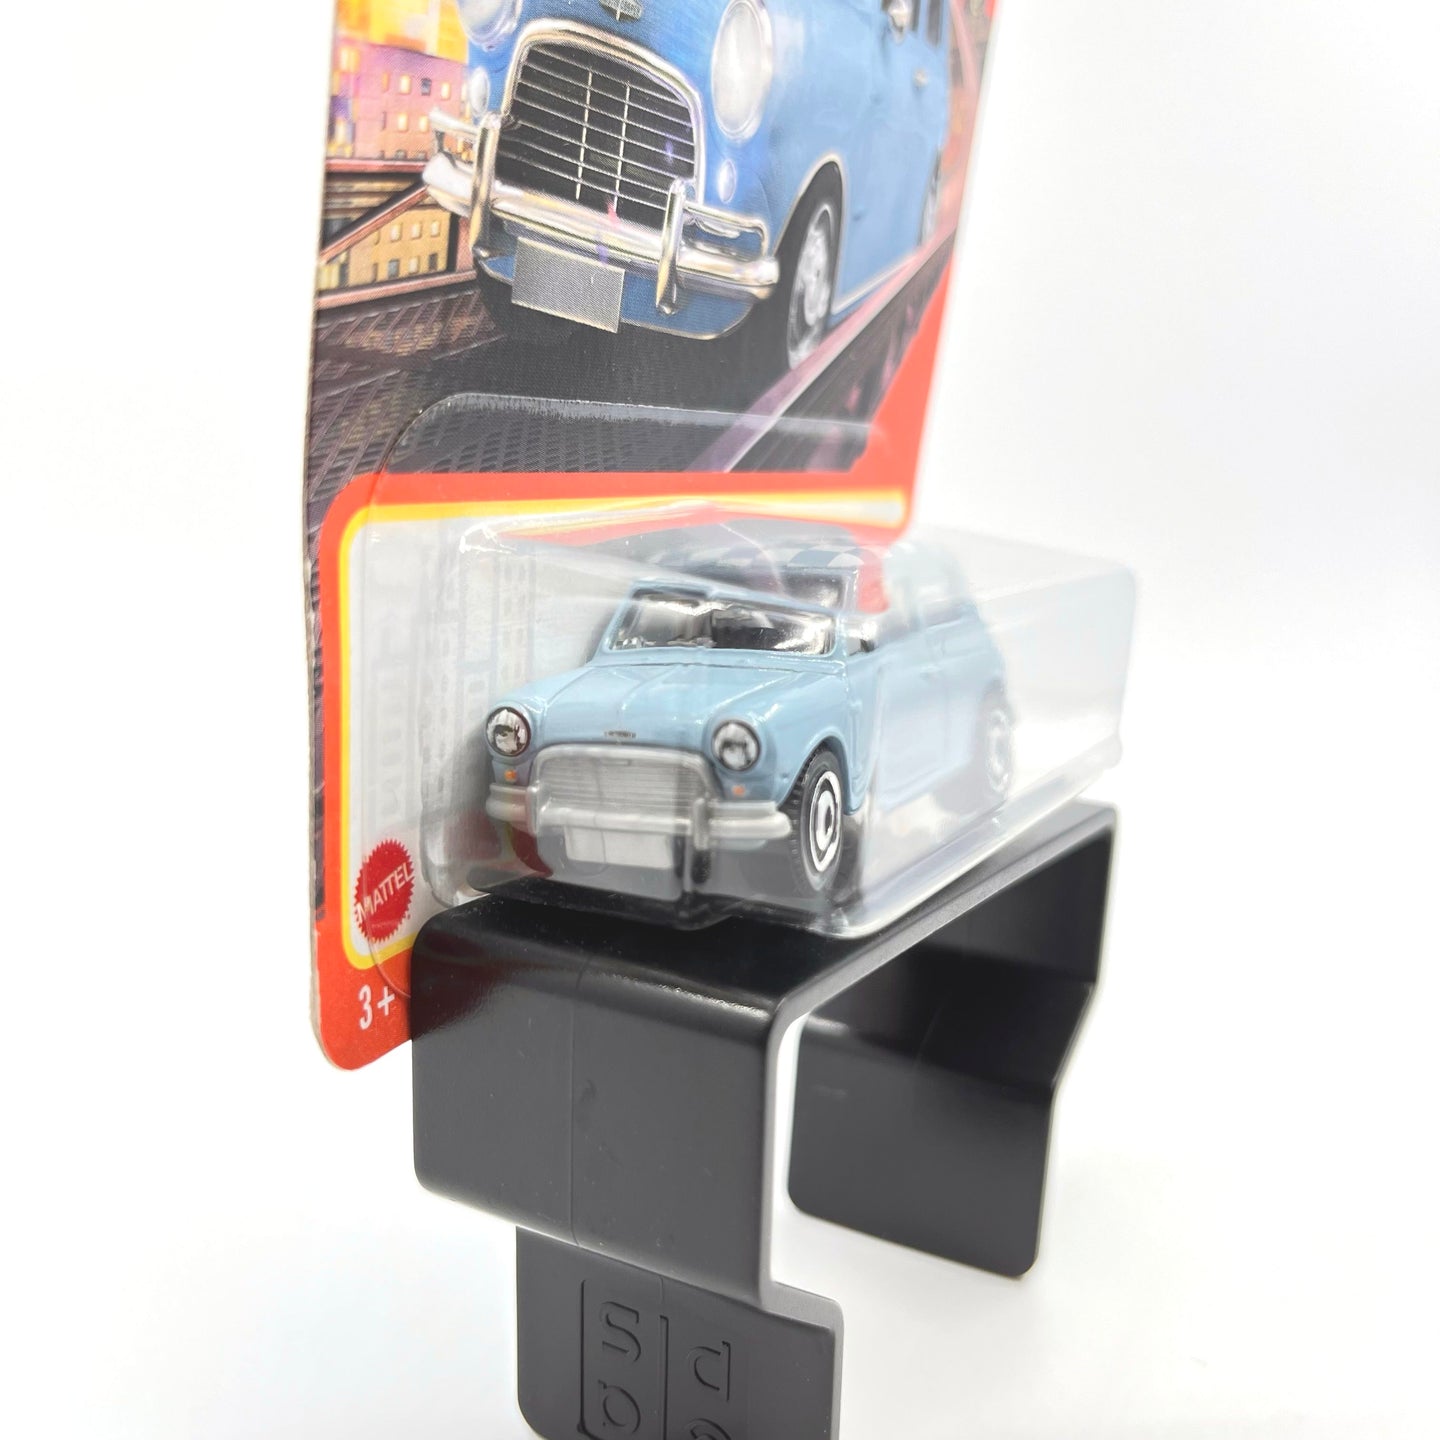 1964 Austin Mini Cooper Rare MatchBox Alloy Diecast Car Model